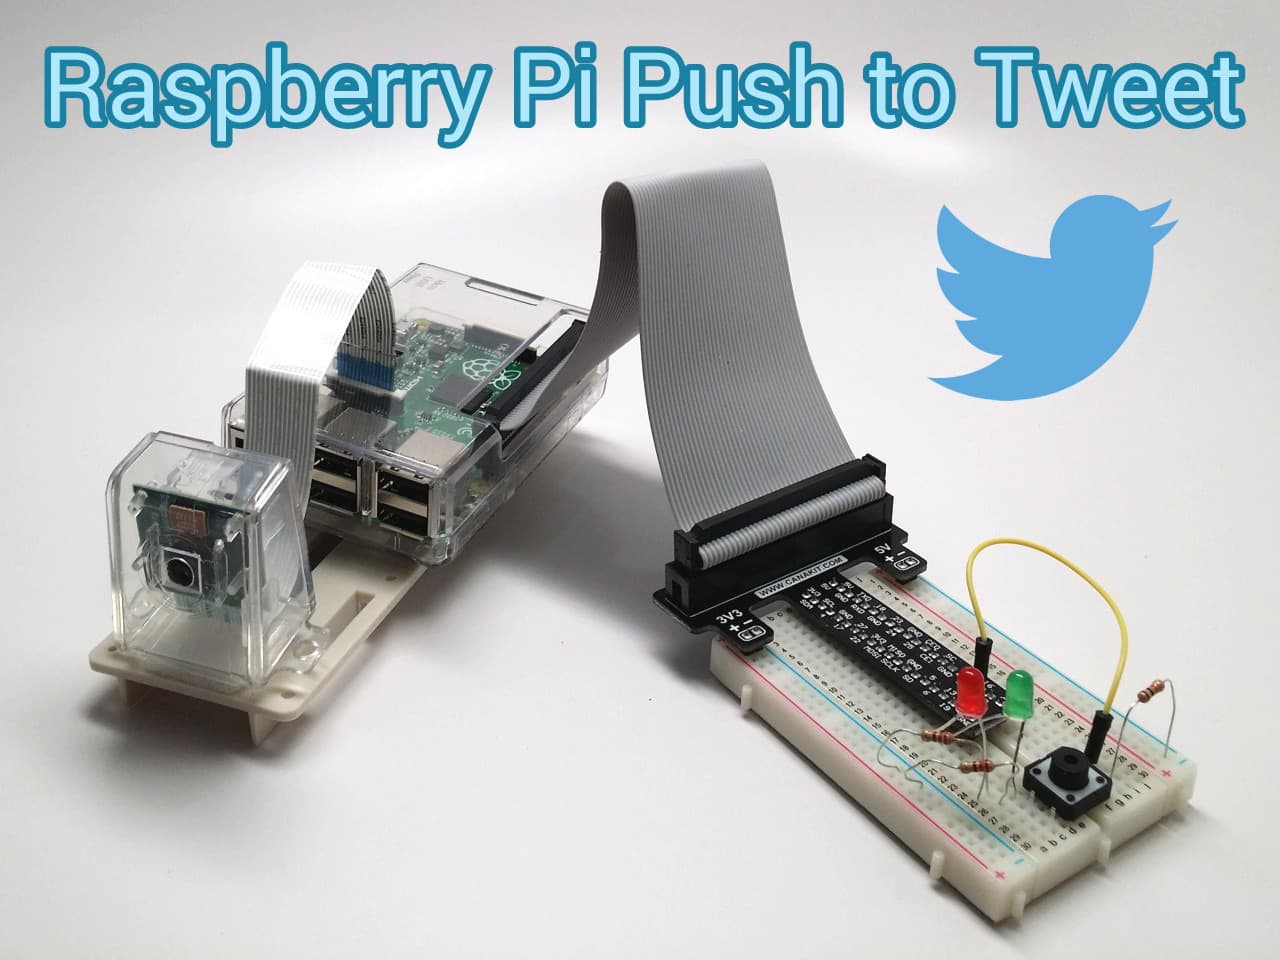 Raspberry Pi Twitter Project Push Button Camera Capture Tweet Photo